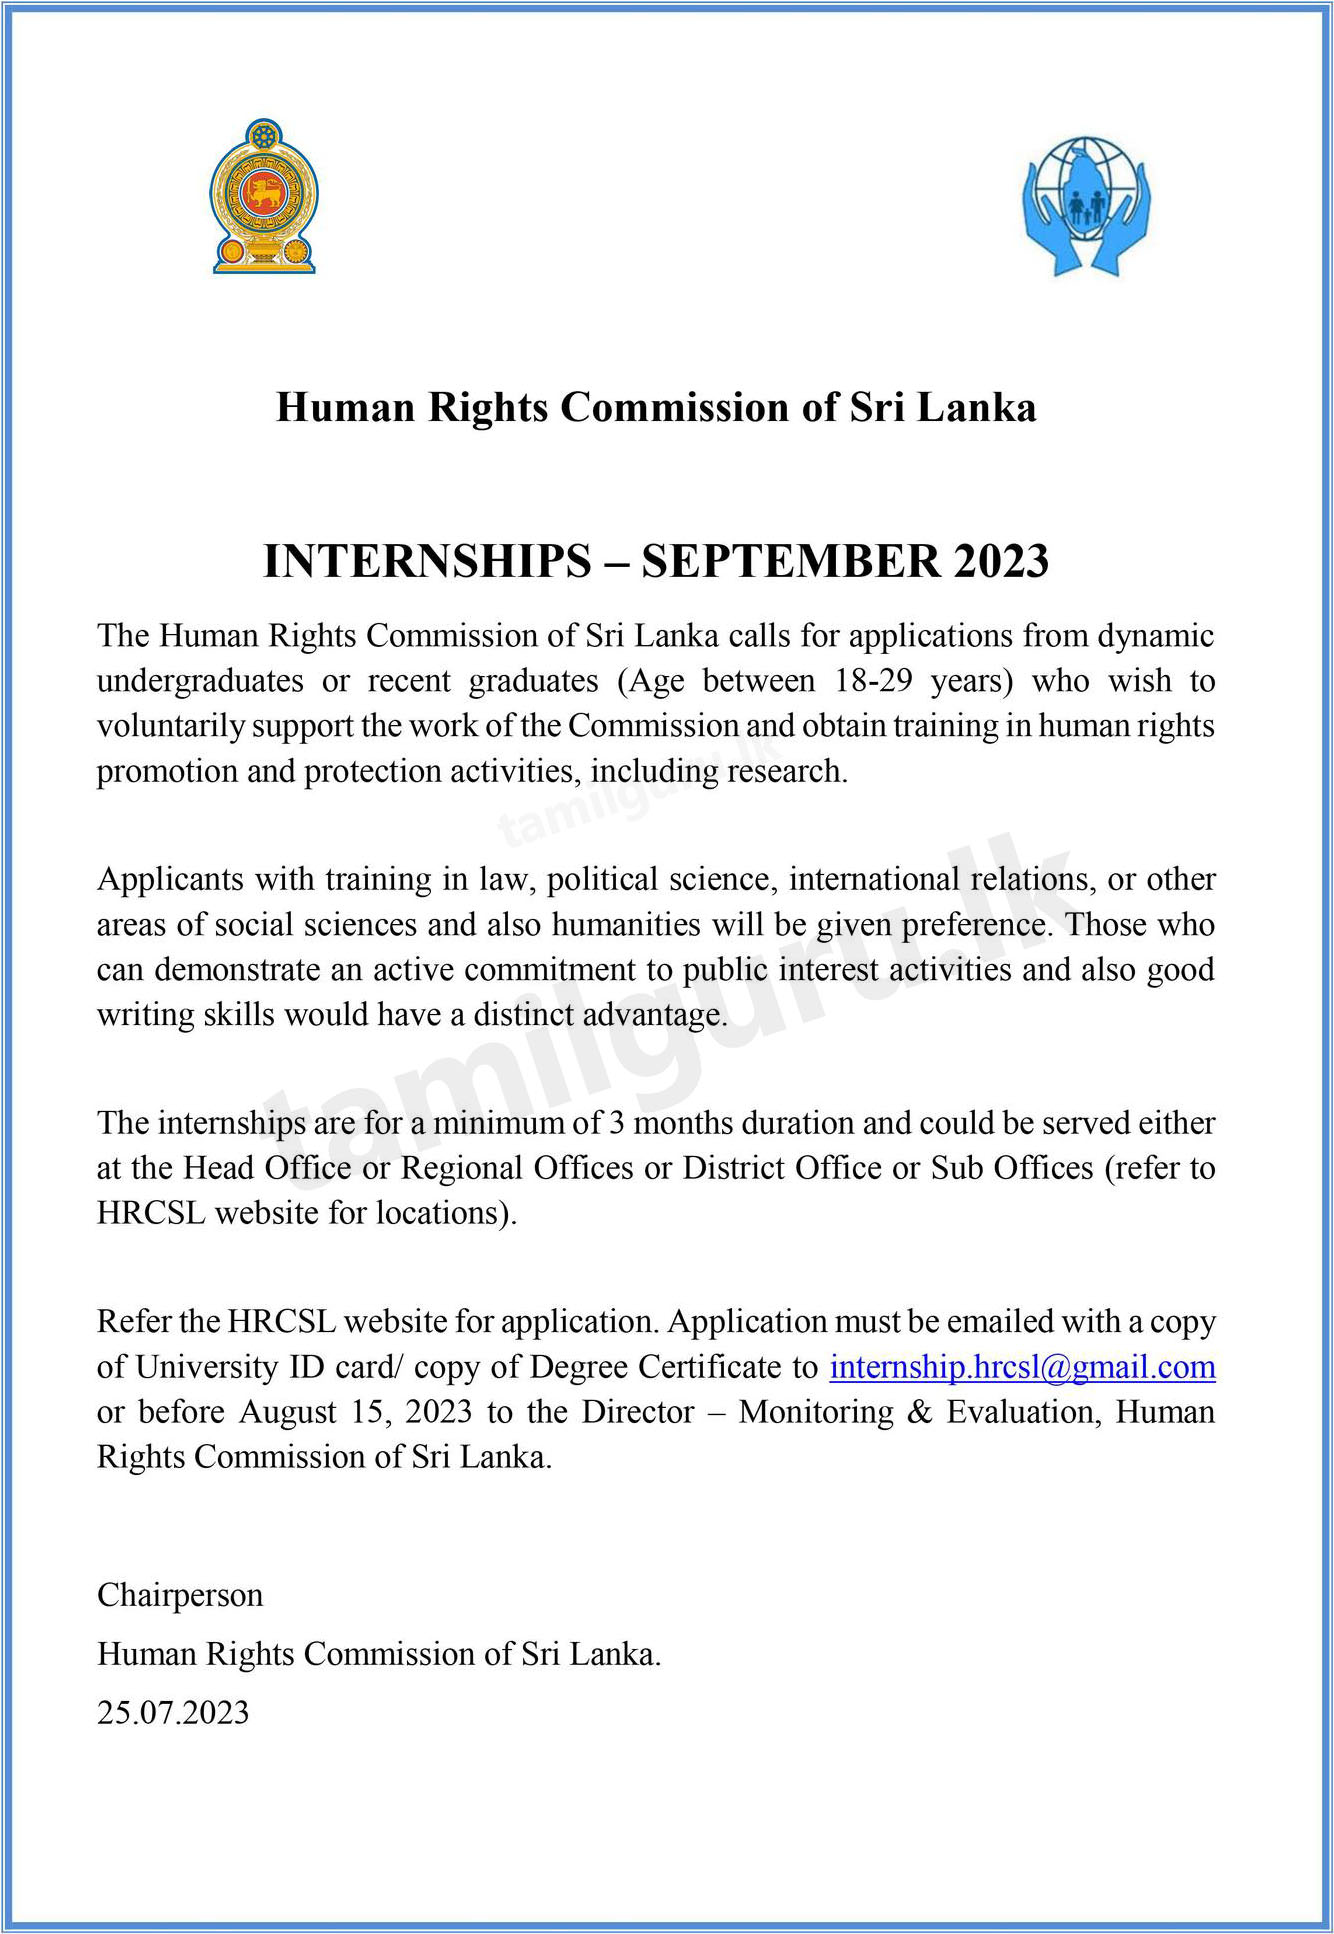 Internship Programme (Vacancies) (September 2023) - Human Rights Commission of Sri Lanka (HRCSL)